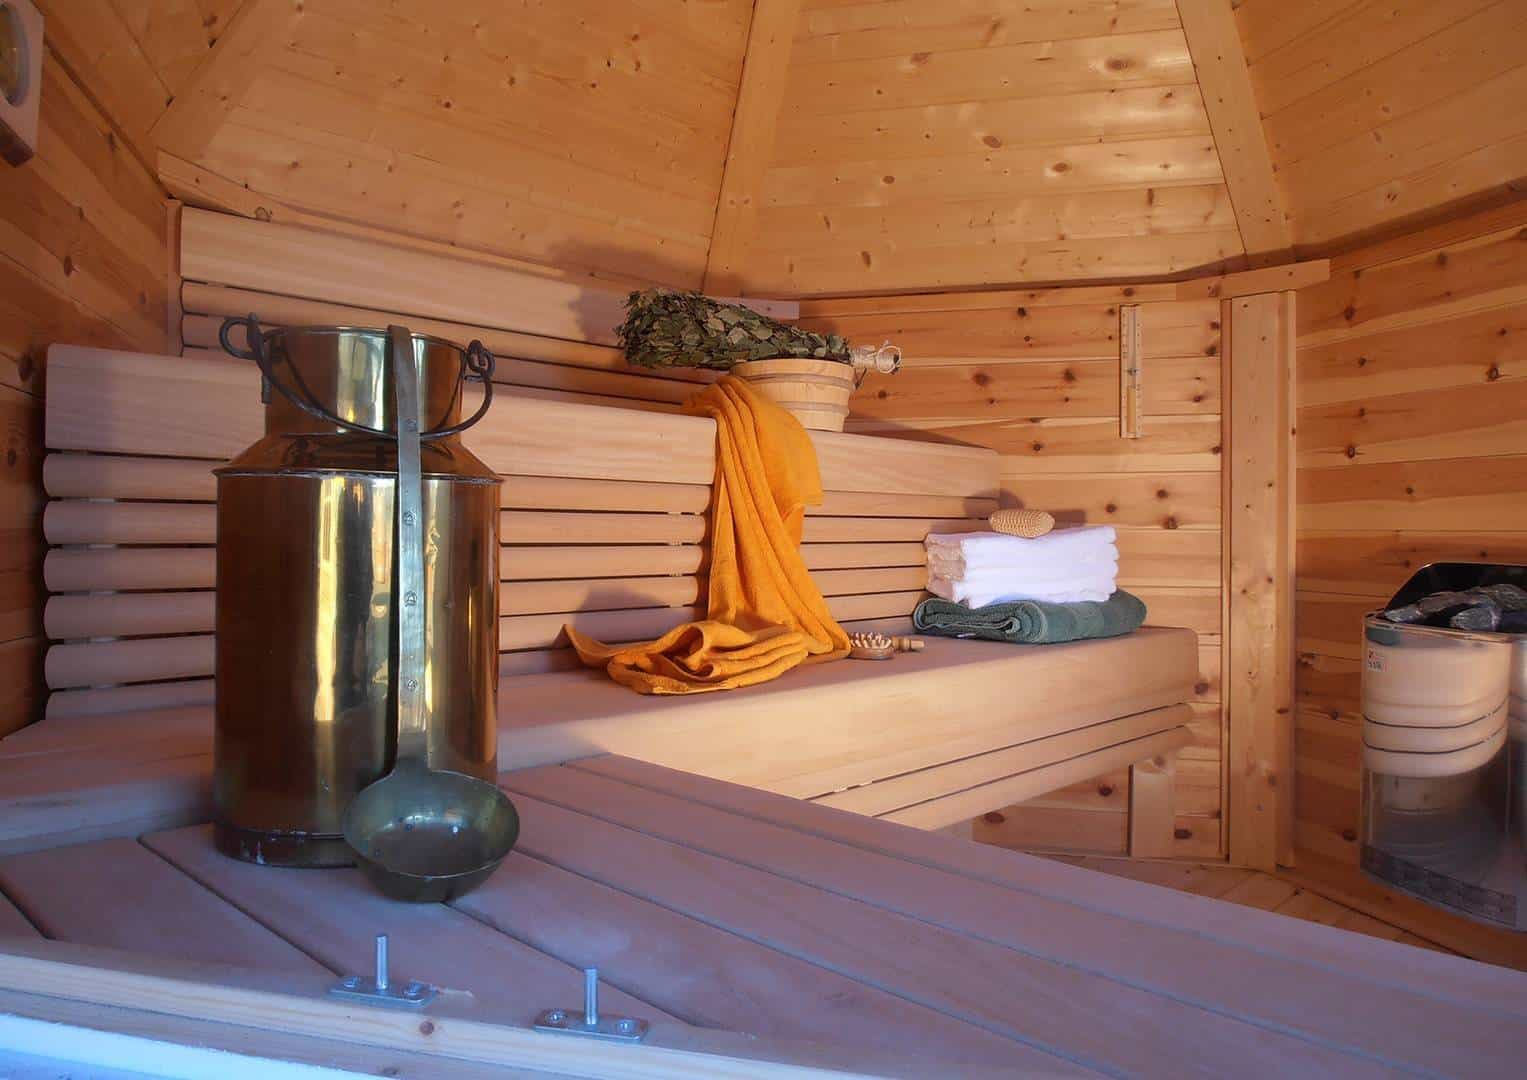 Domek drewniany - sauna 4,5m2